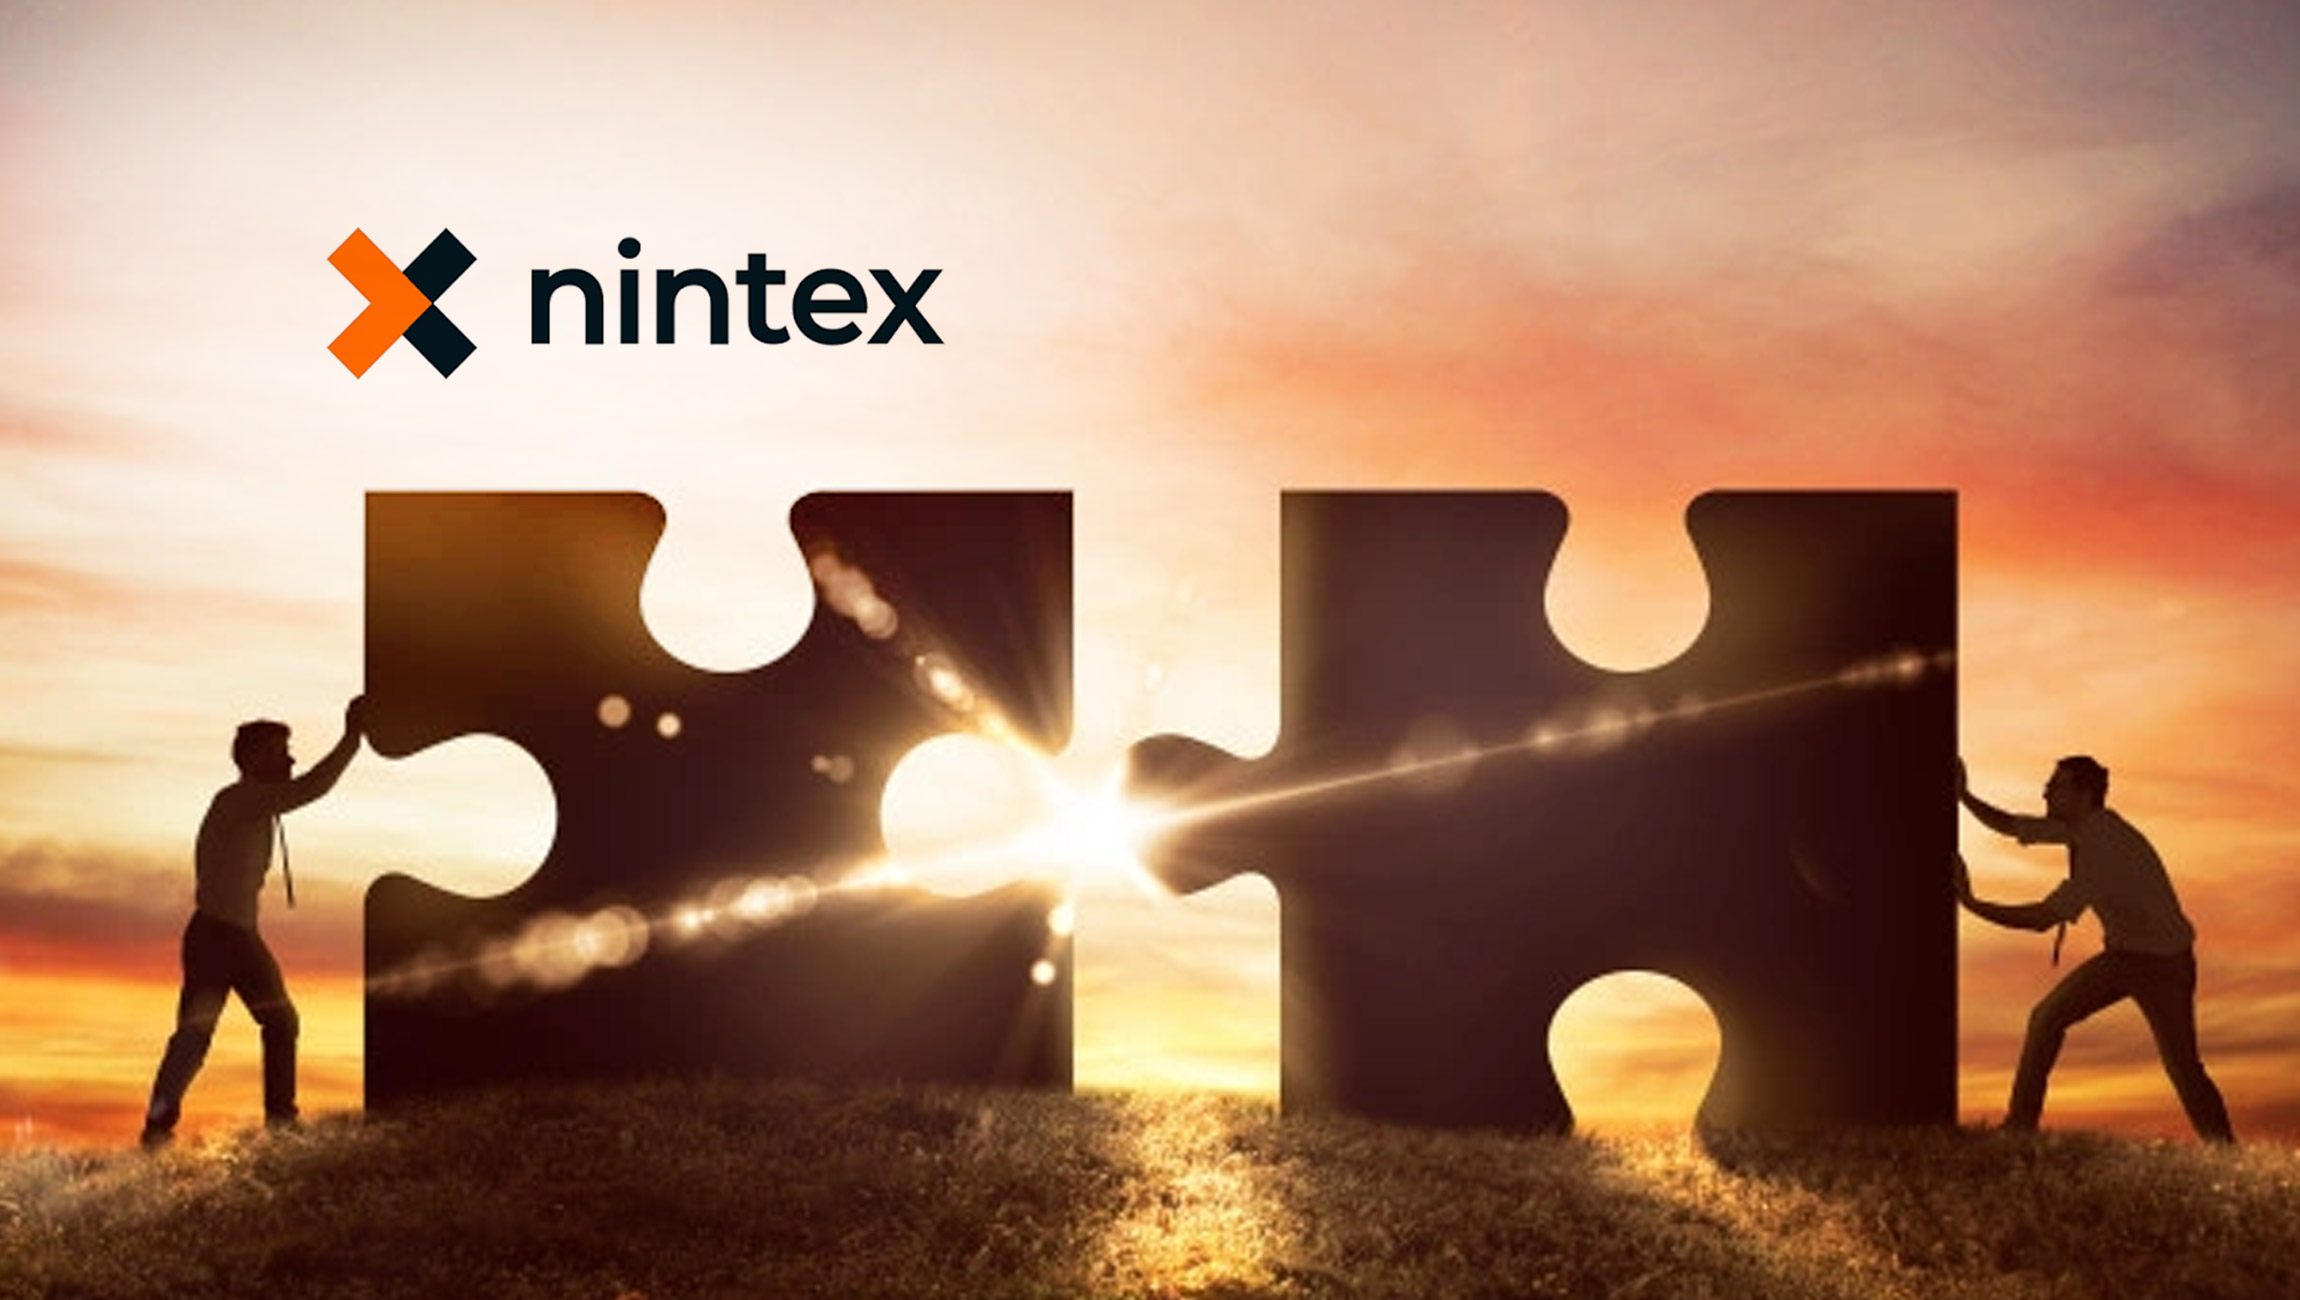 Nintex Completes its Acquisition of Skuid